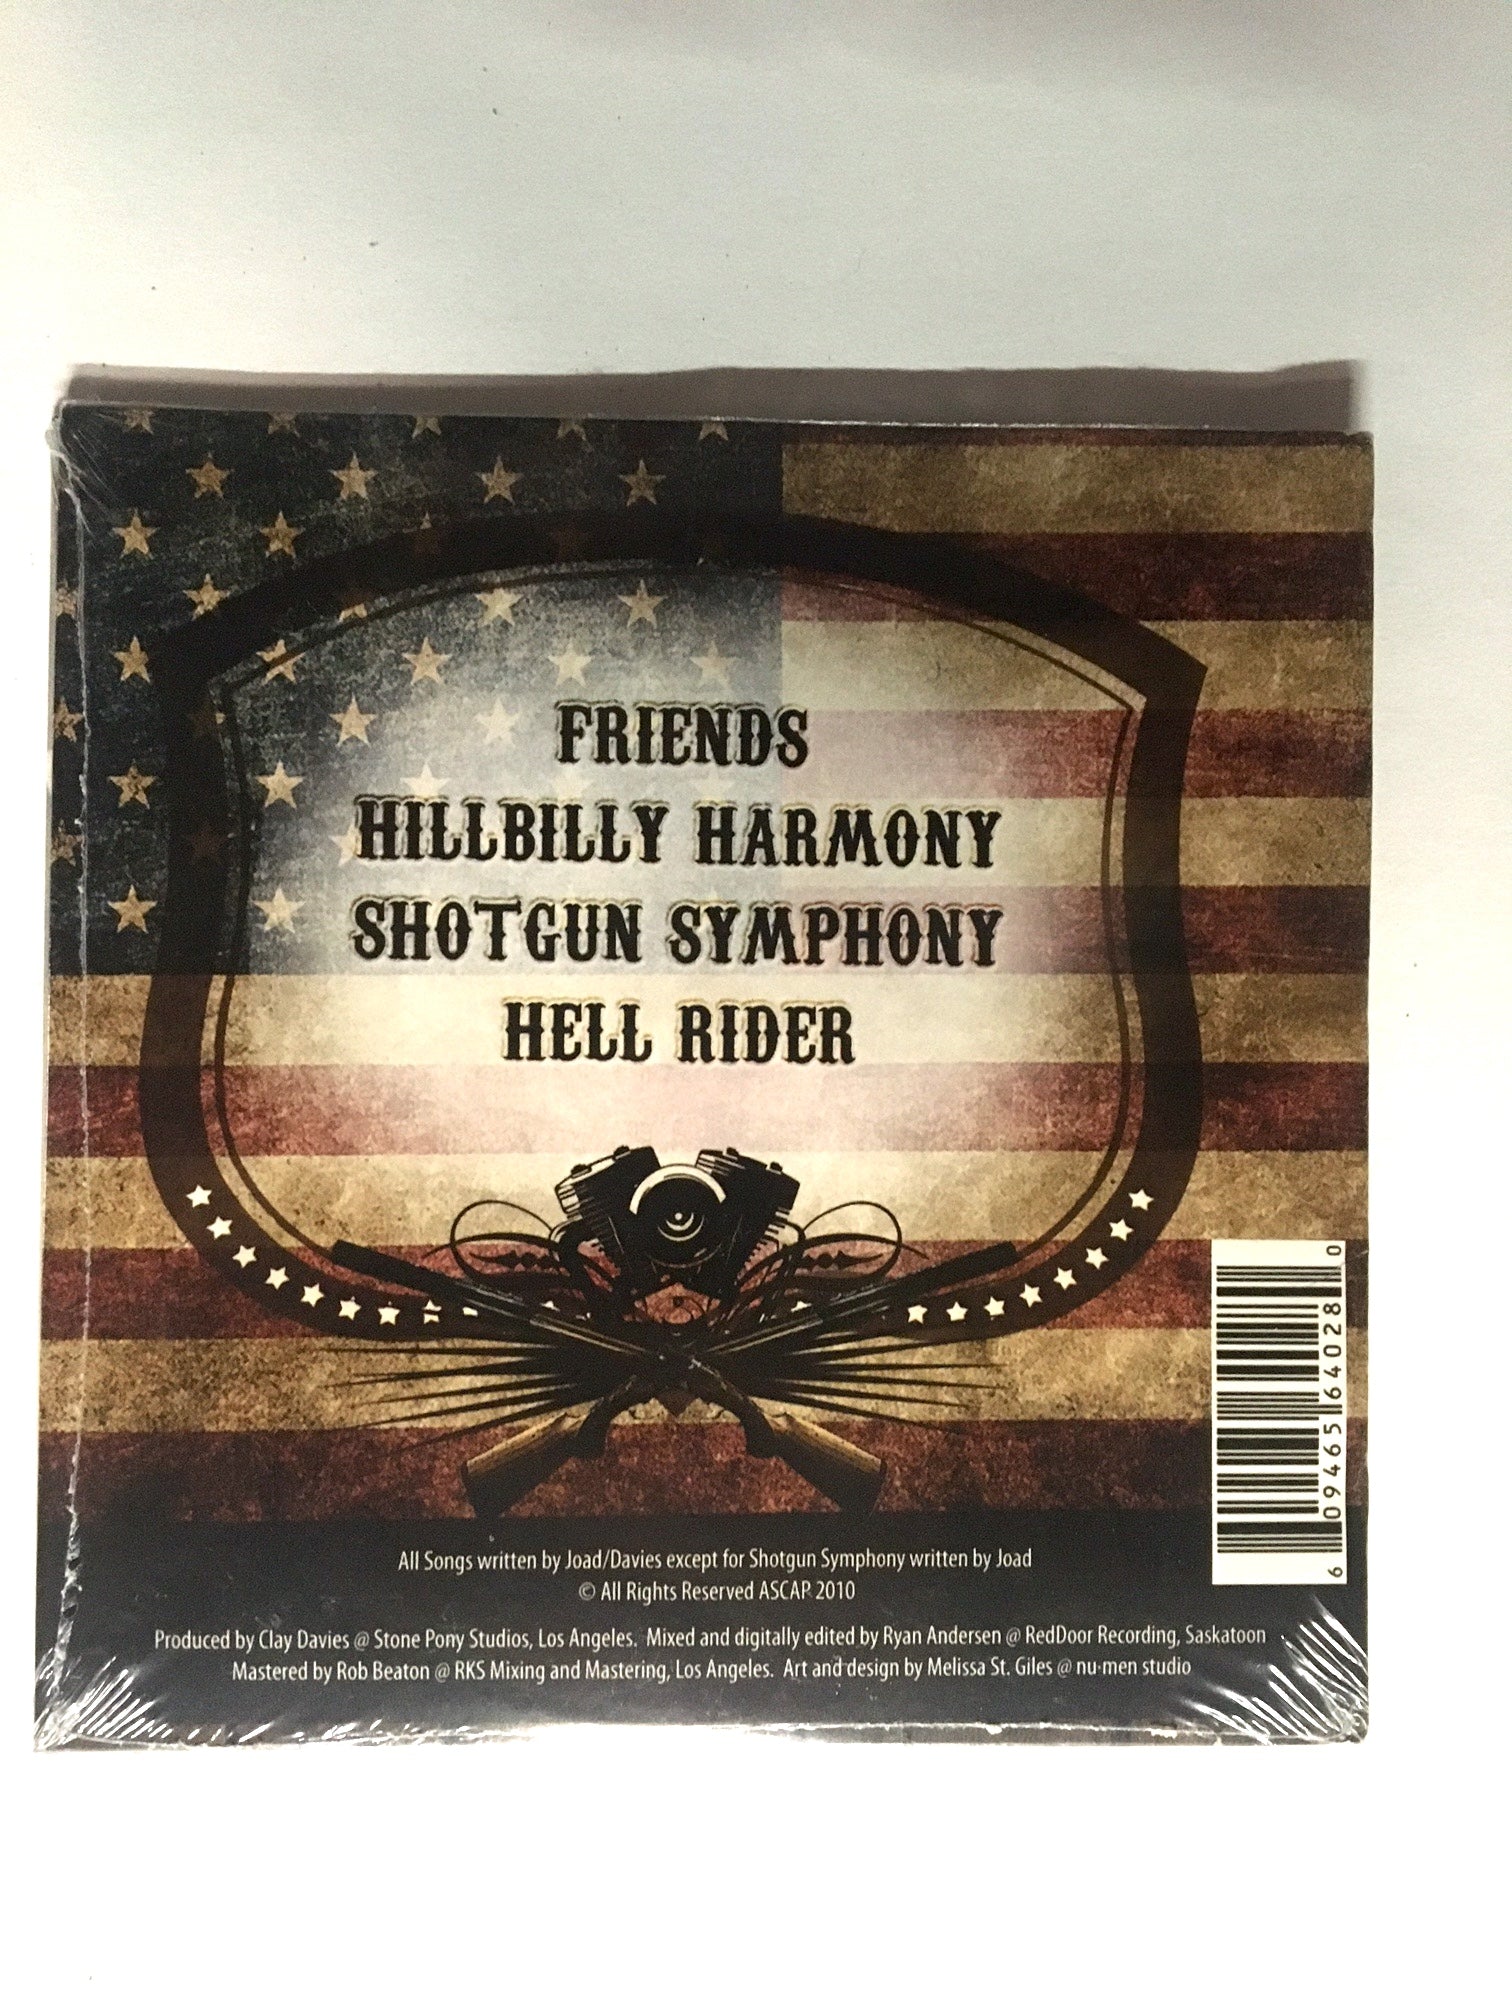 Original Pressing 4 Song "Hillbilly Harmony EP"